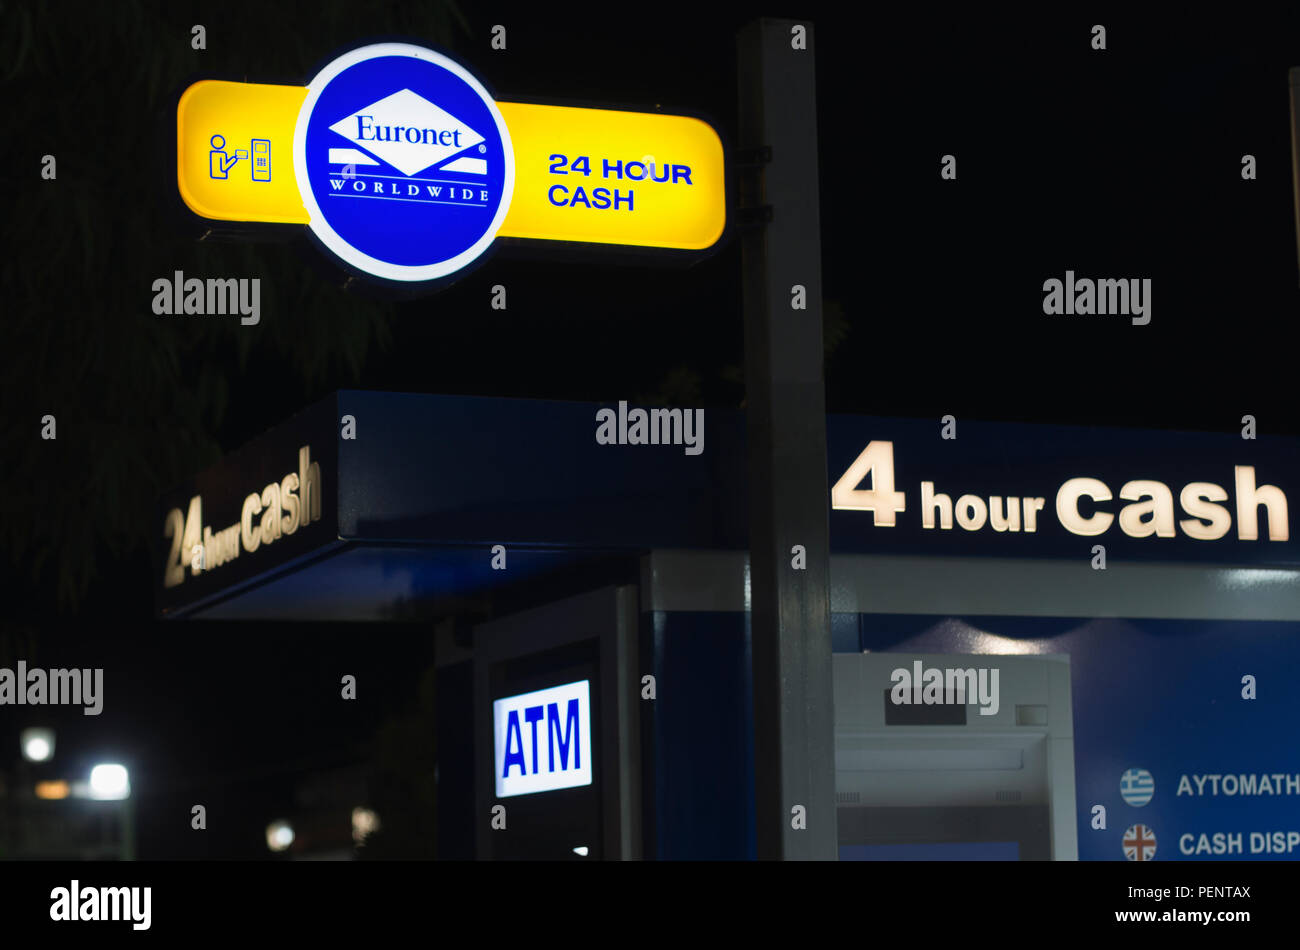 Kolymbia, Rhodes island, Greece - 21 September 2017: ATM open 24 hours with night illumination Stock Photo